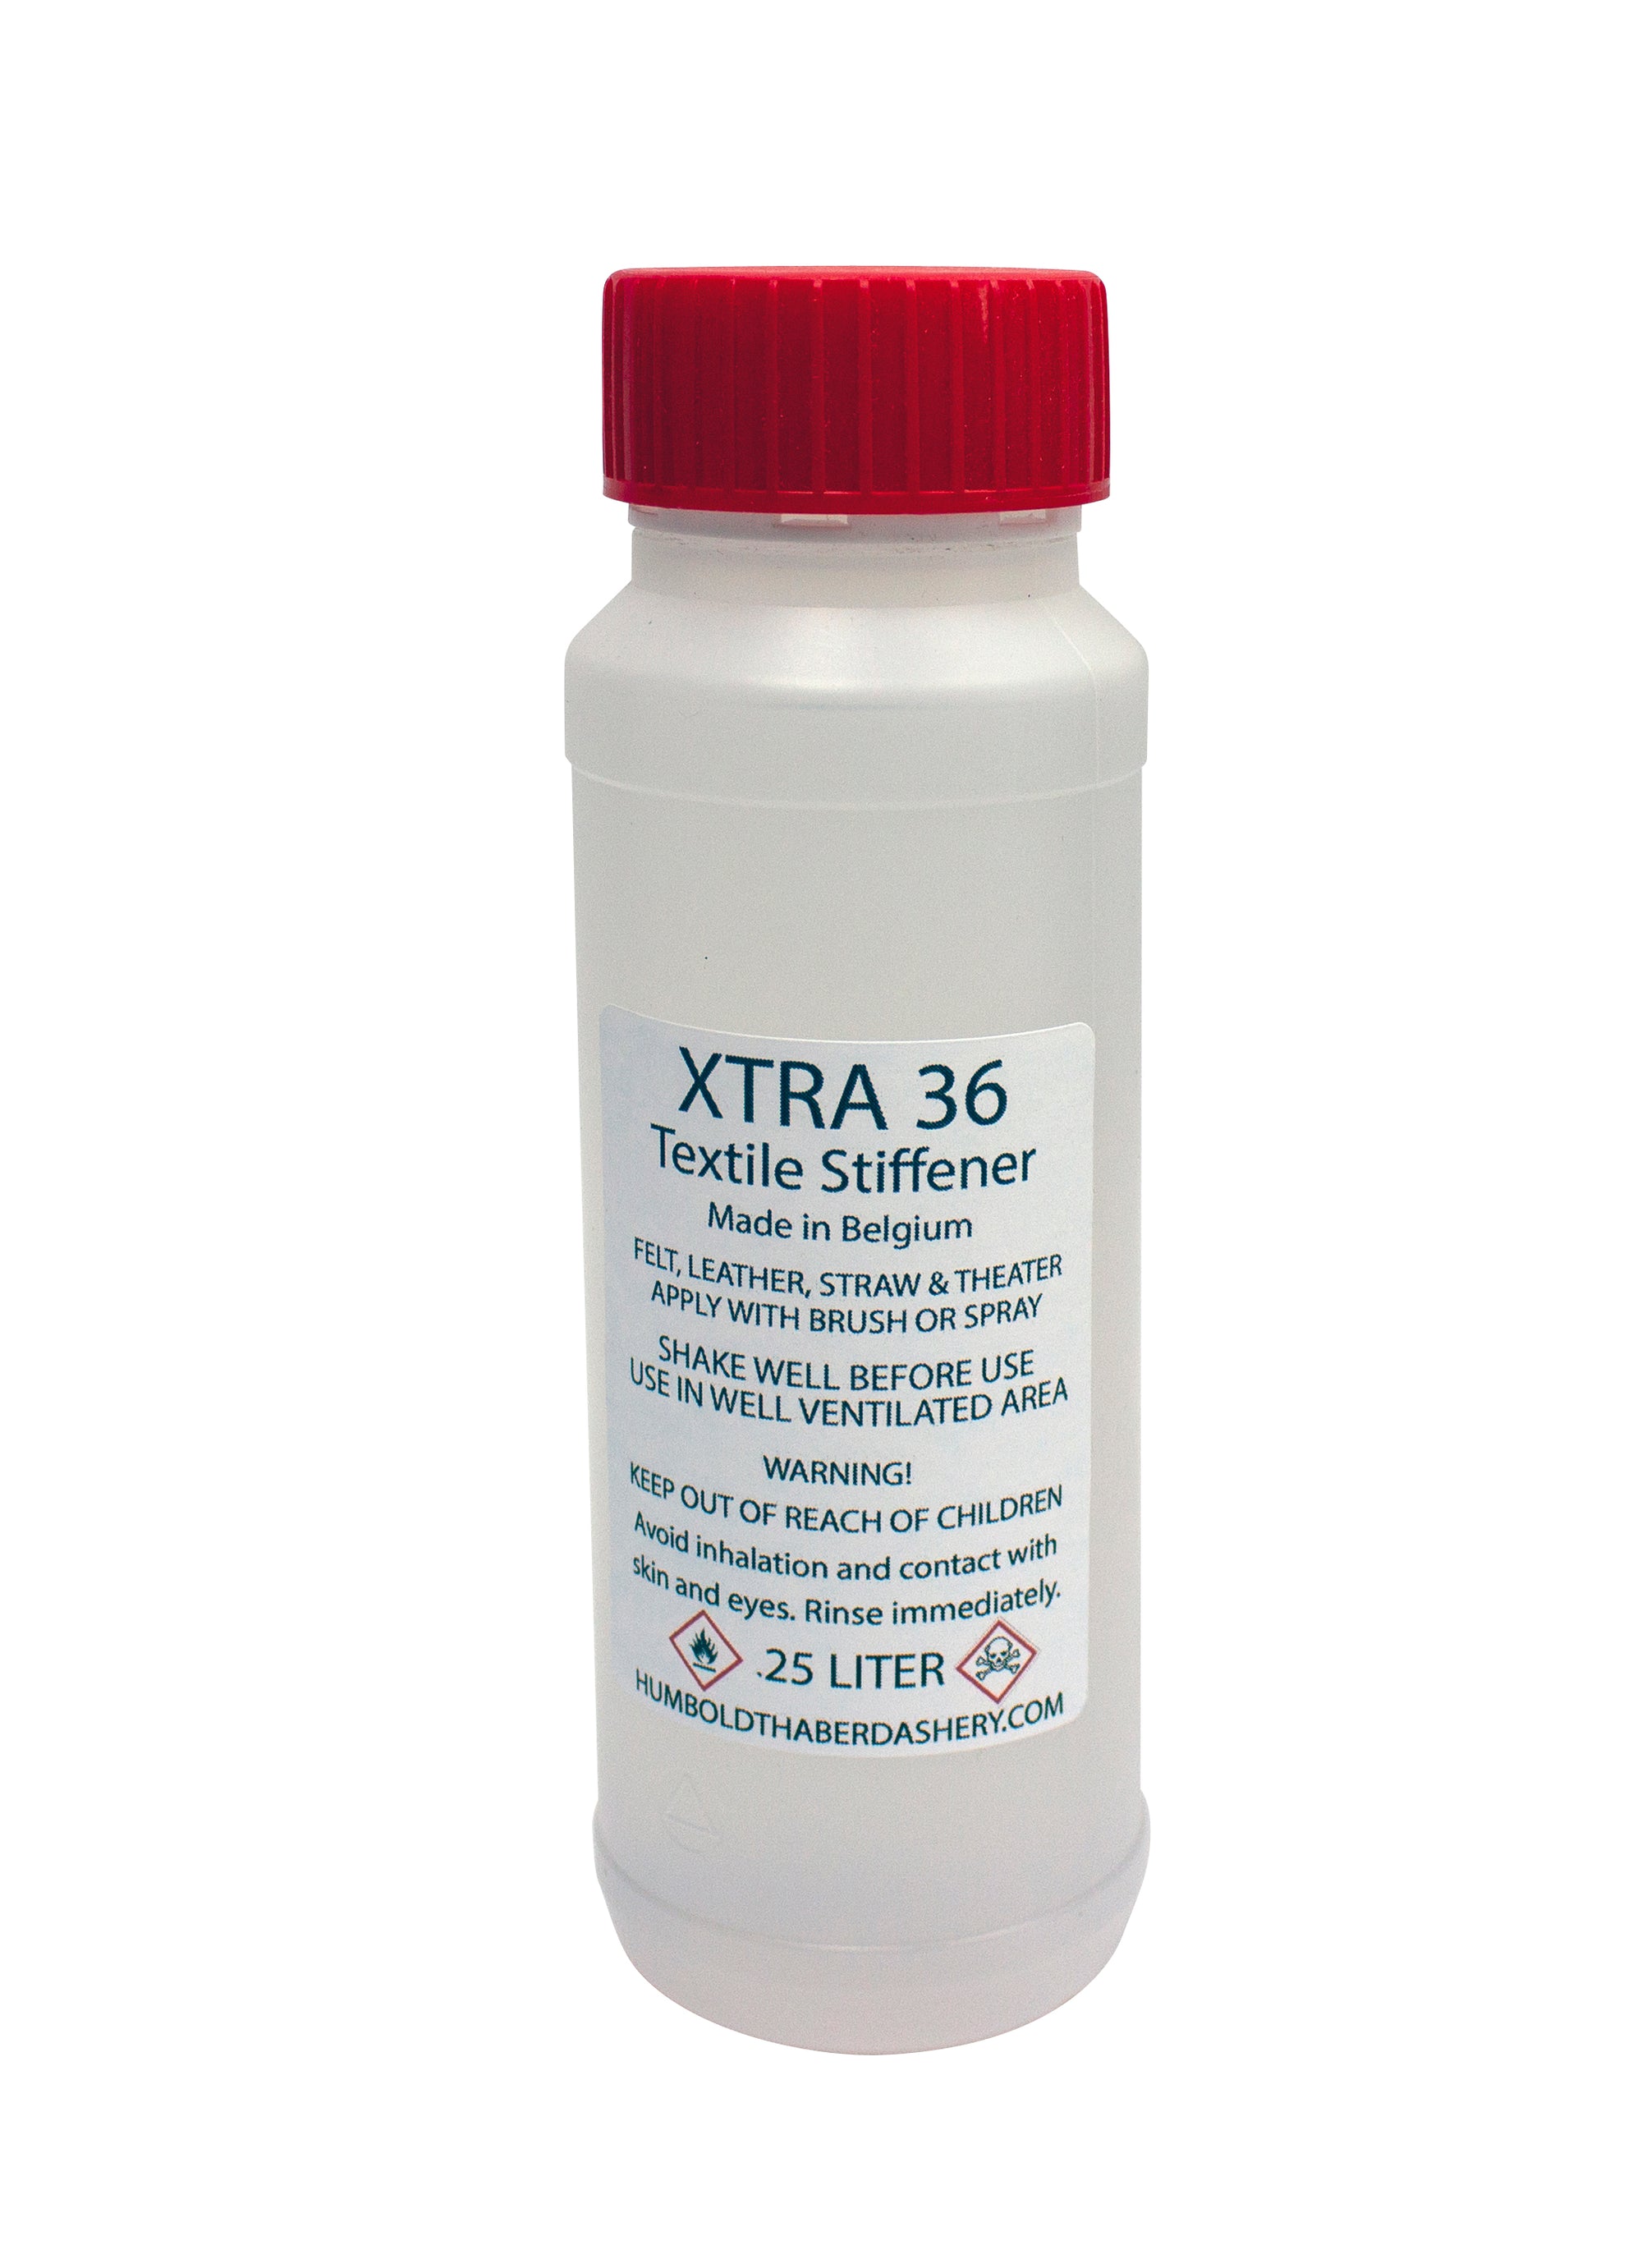 XTRA 36 Textile Stiffener